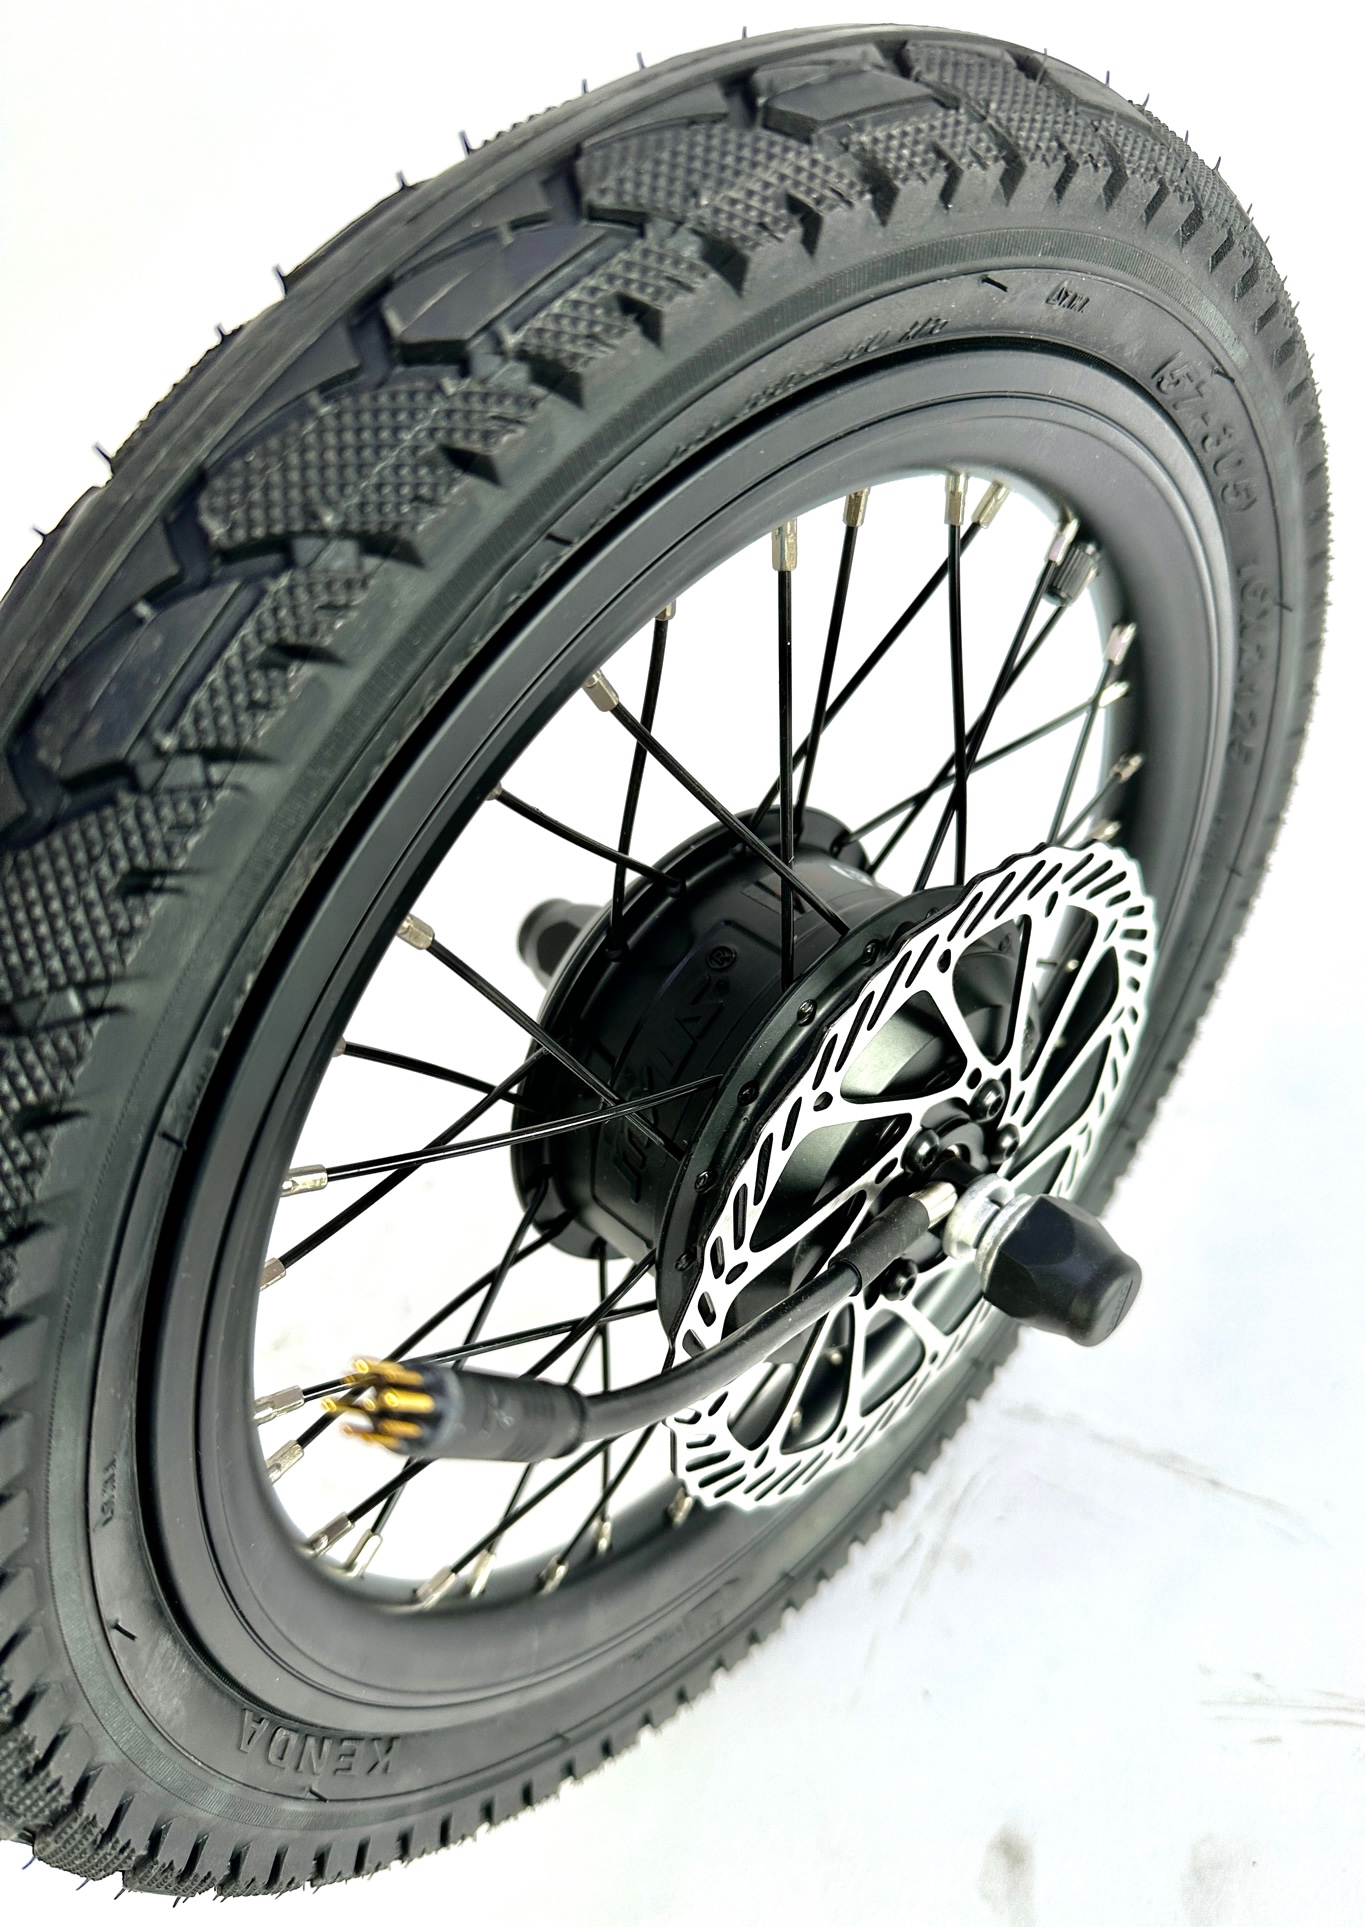 16 inch wheelset aluminium rim with 250W MXUS front wheel motor, 16 x 2.125